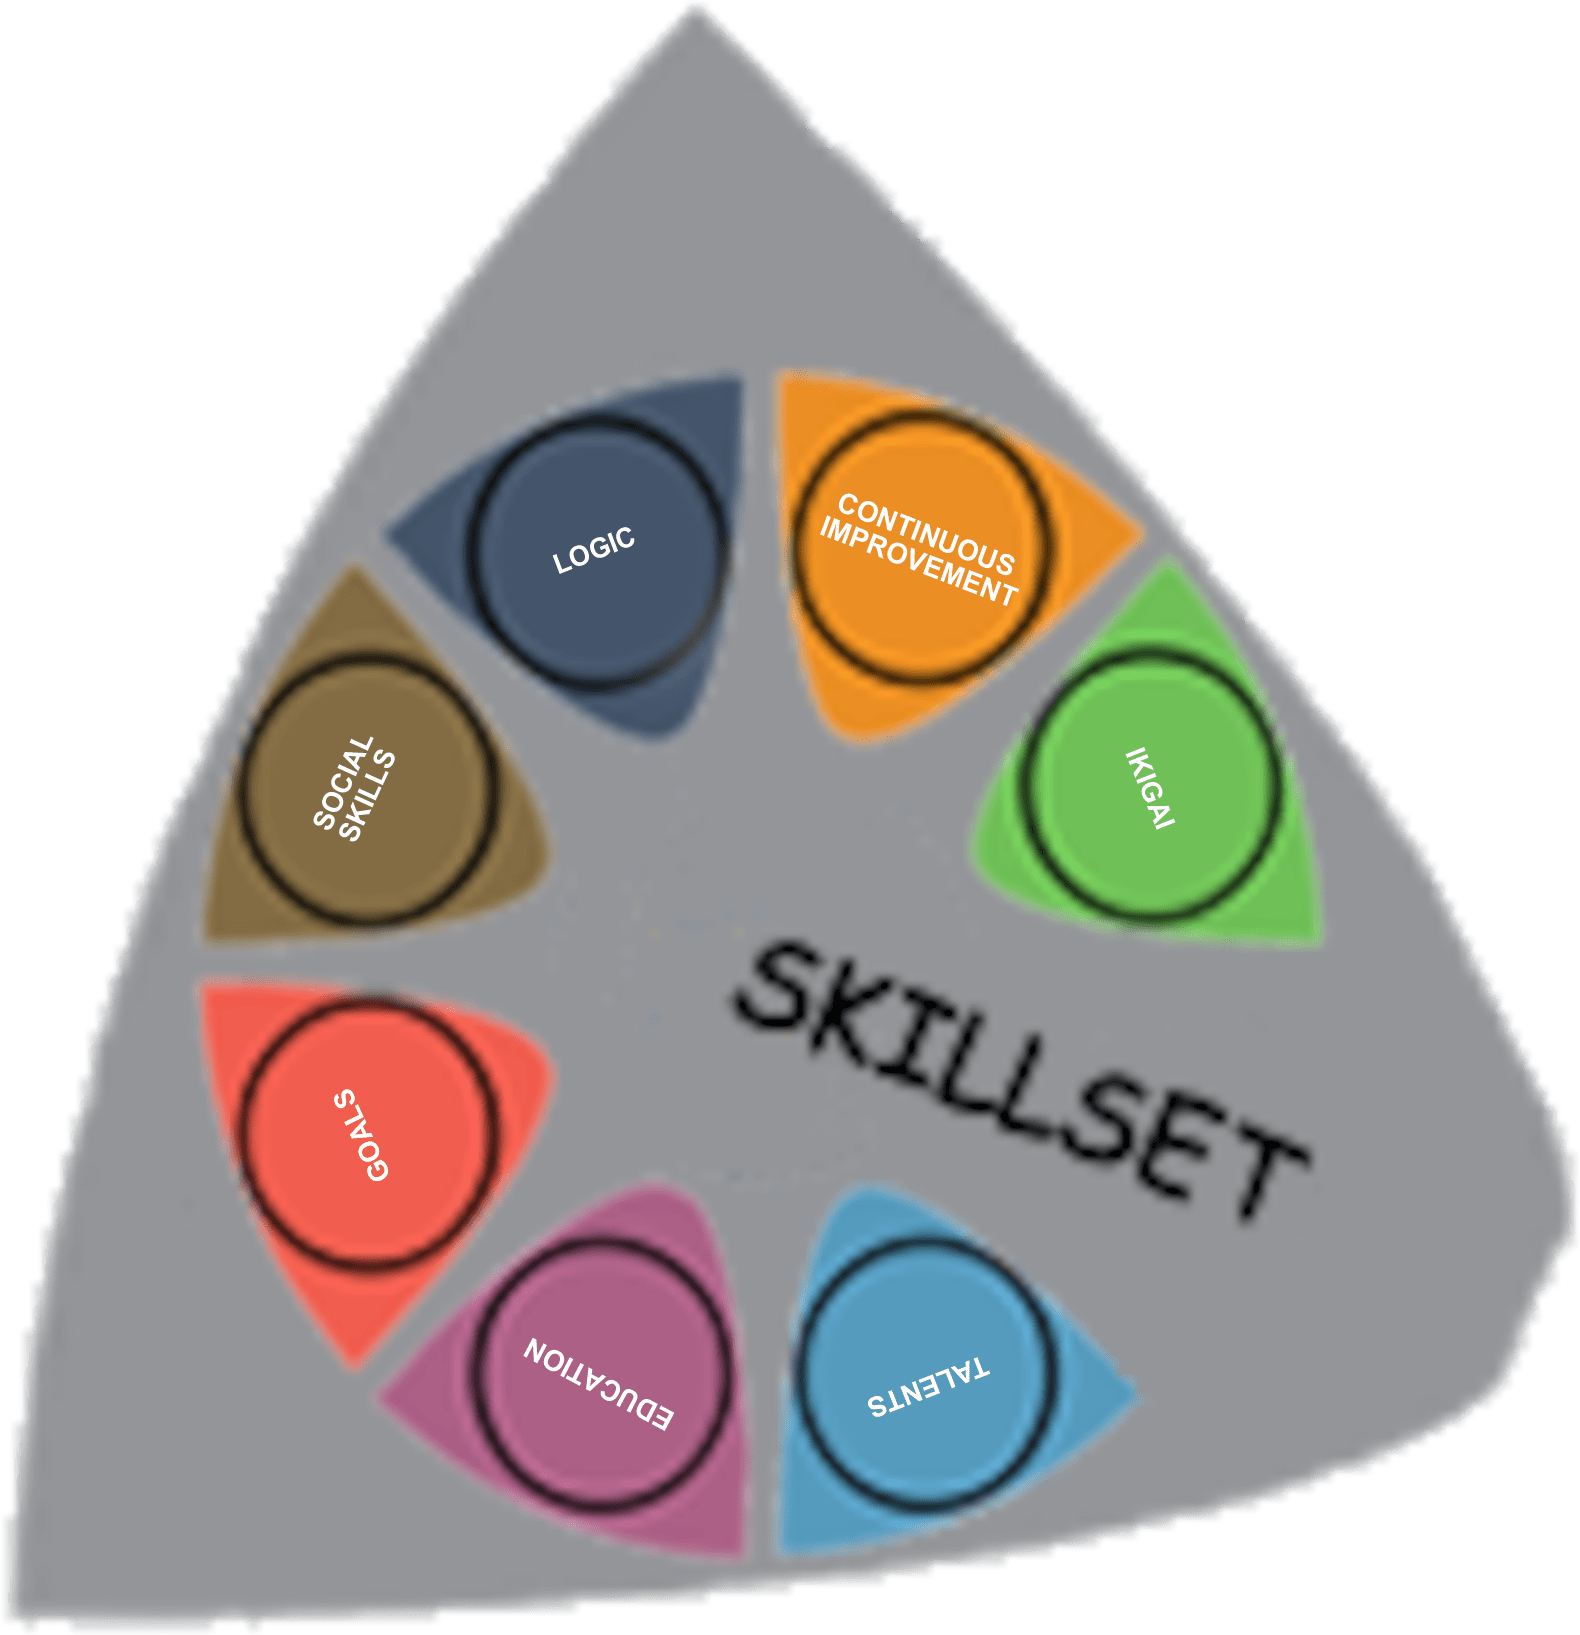 Improving everything - developing your skillset